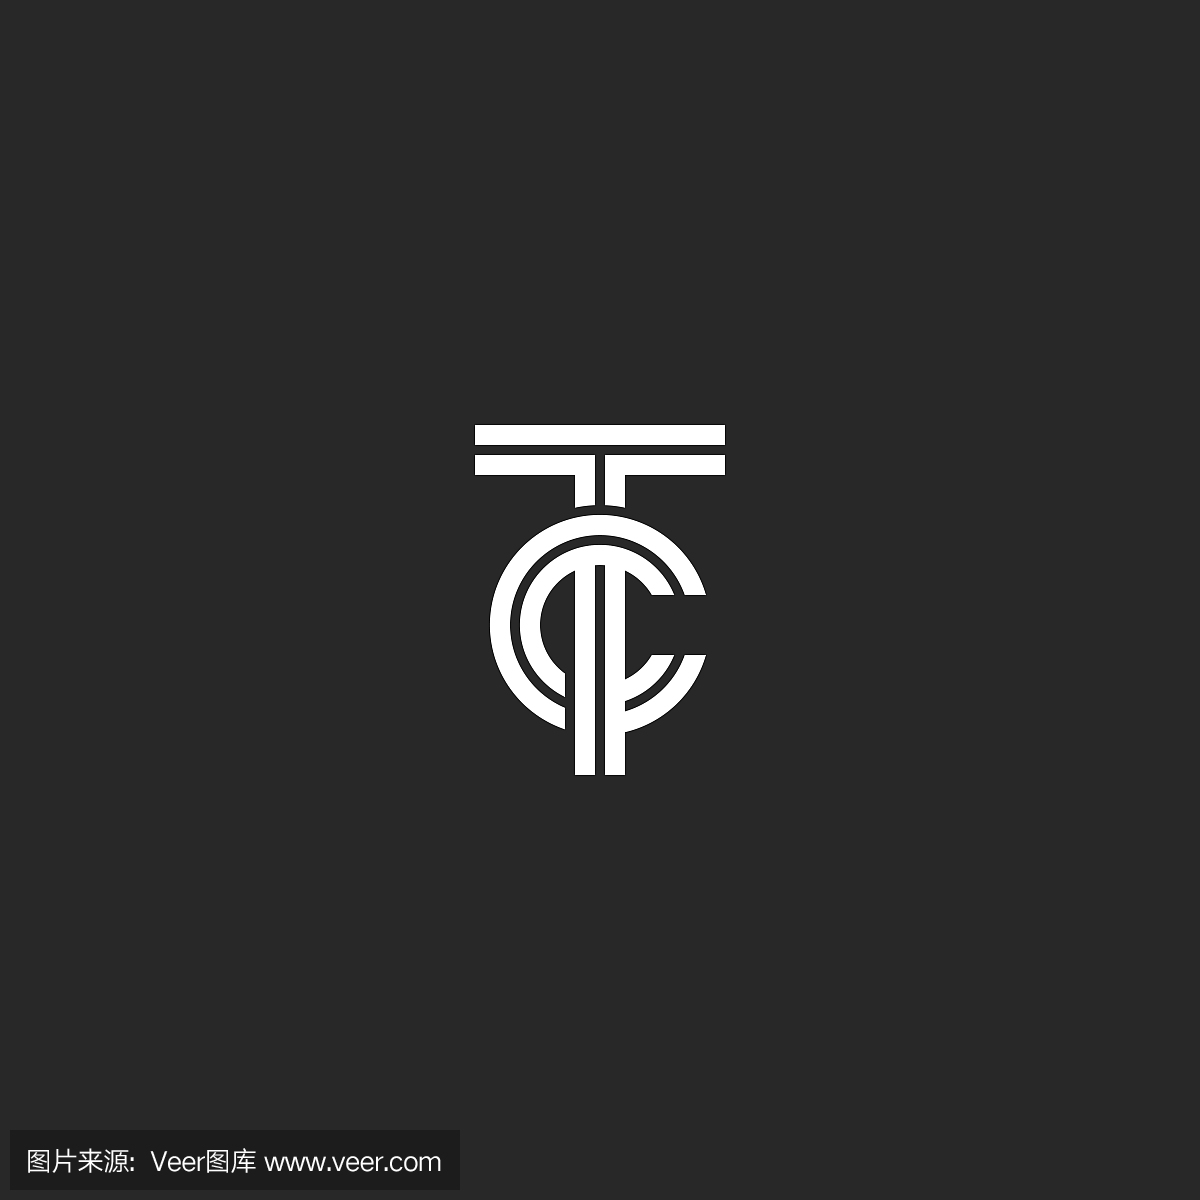 Monogram TC符号,时髦名称首字母缩写为CT名